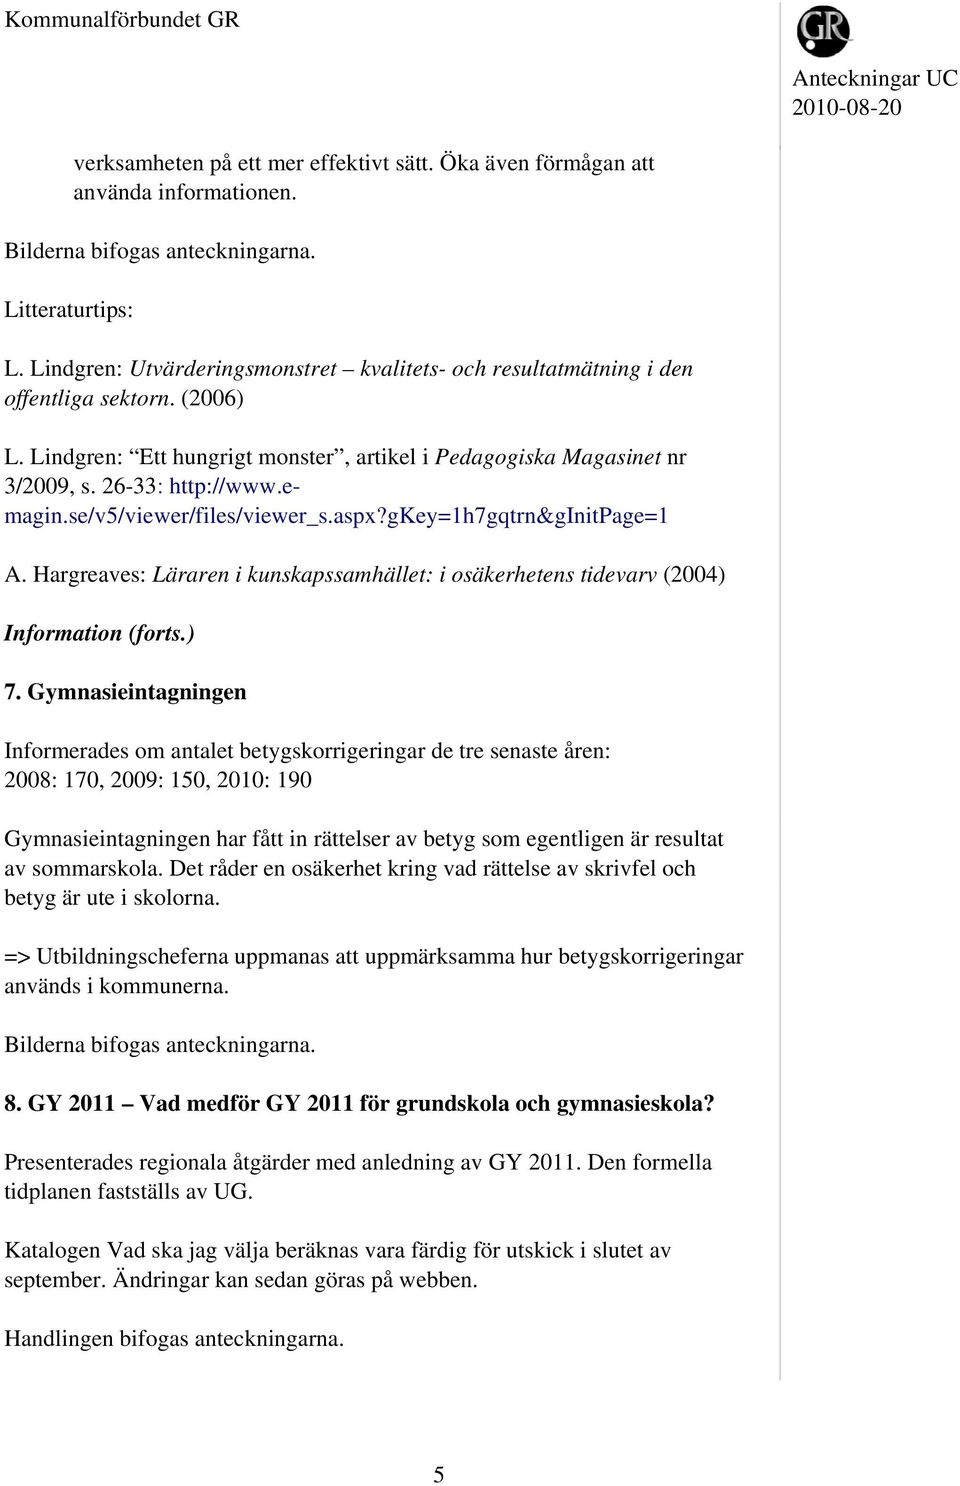 emagin.se/v5/viewer/files/viewer_s.aspx?gkey=1h7gqtrn&ginitpage=1 A. Hargreaves: Läraren i kunskapssamhället: i osäkerhetens tidevarv (2004) Information (forts.) 7.